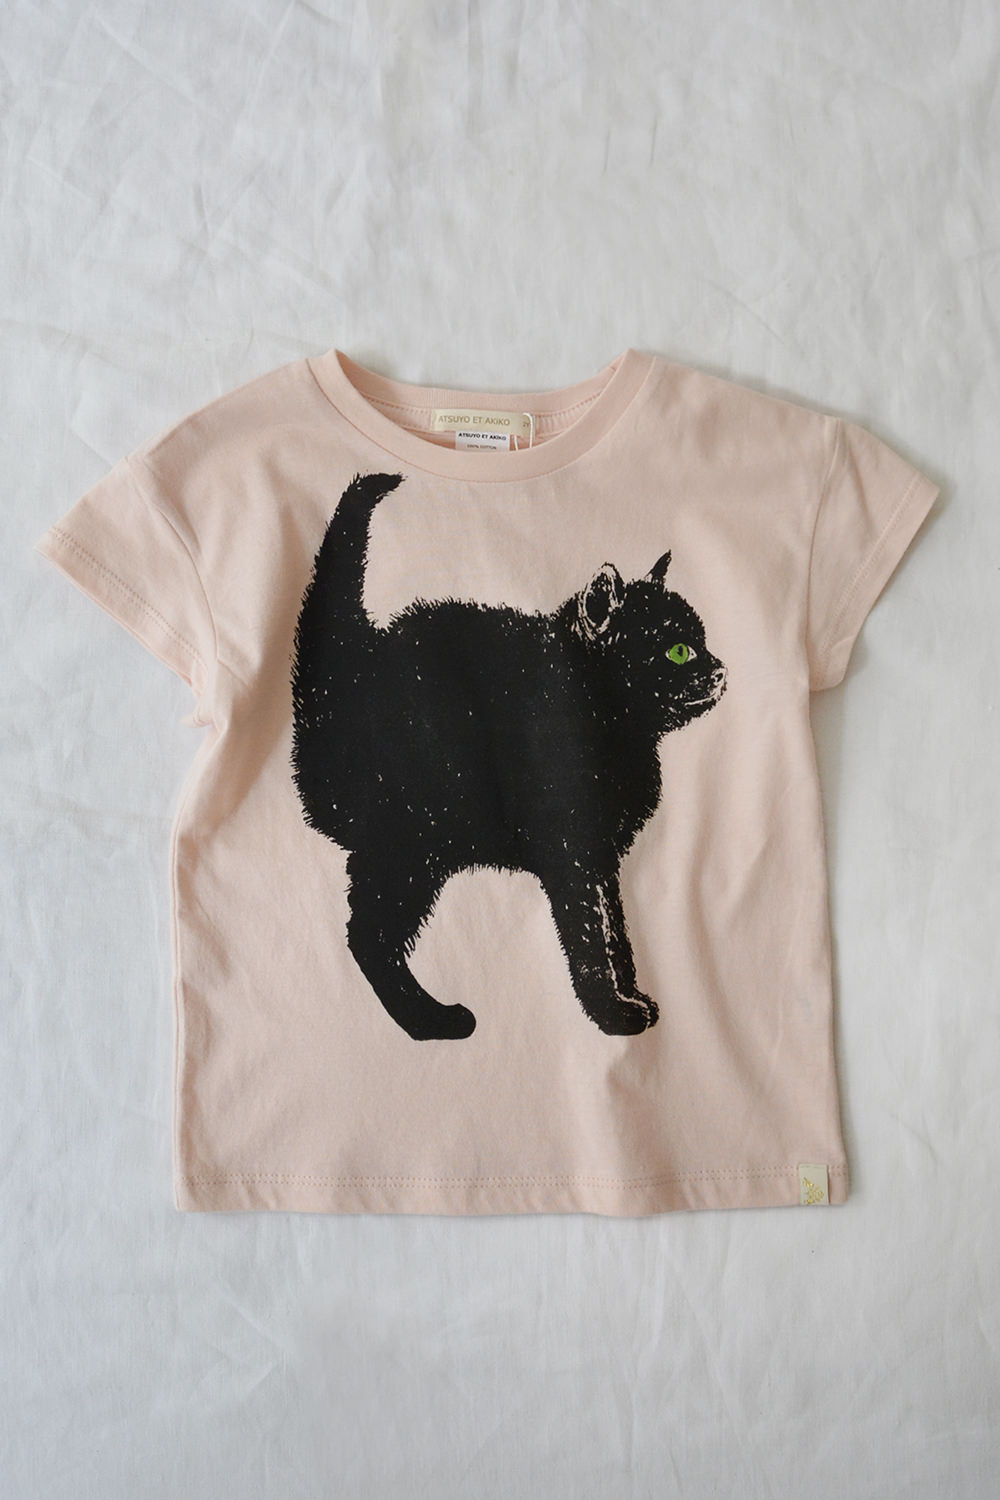 Kids cream shirt Organic cotton shirt Cat print cat shirt kids tee